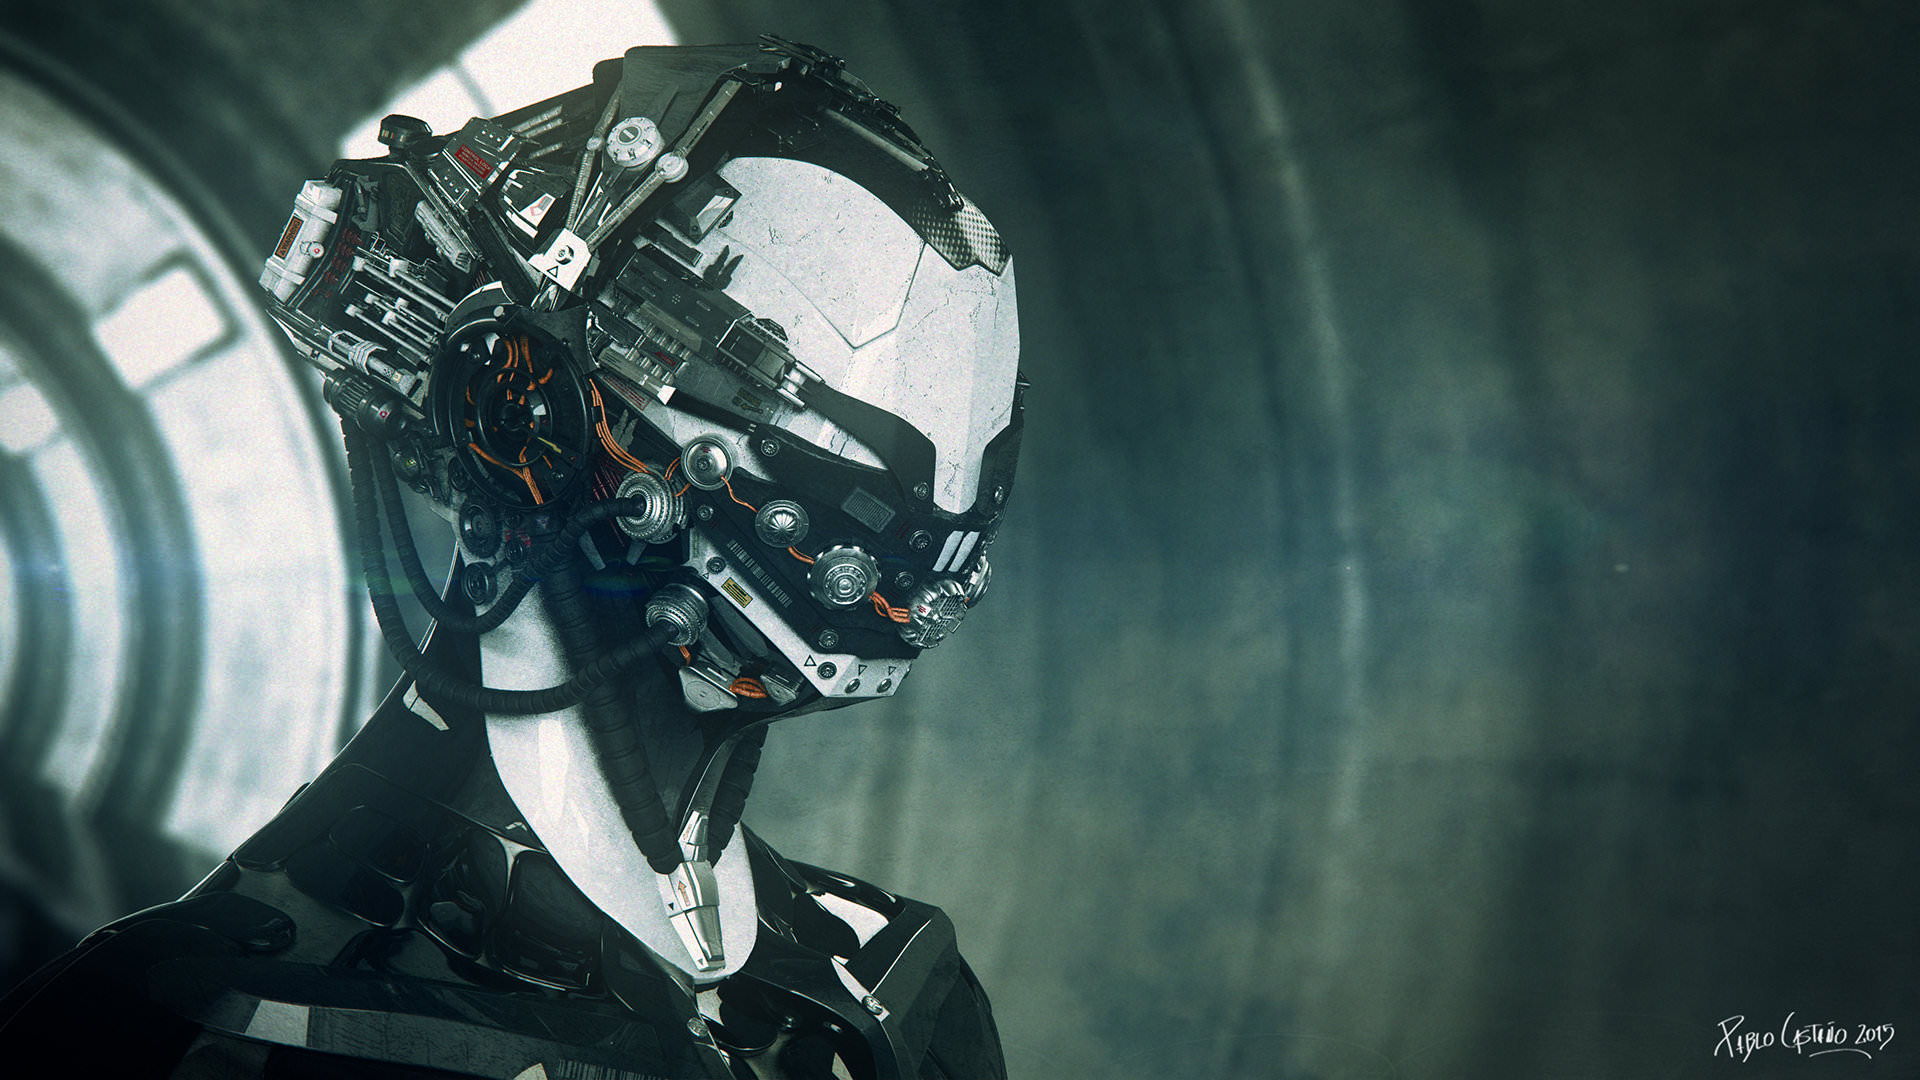 Science Fiction Robot Futuristic Digital Art 2015 Year 1920x1080